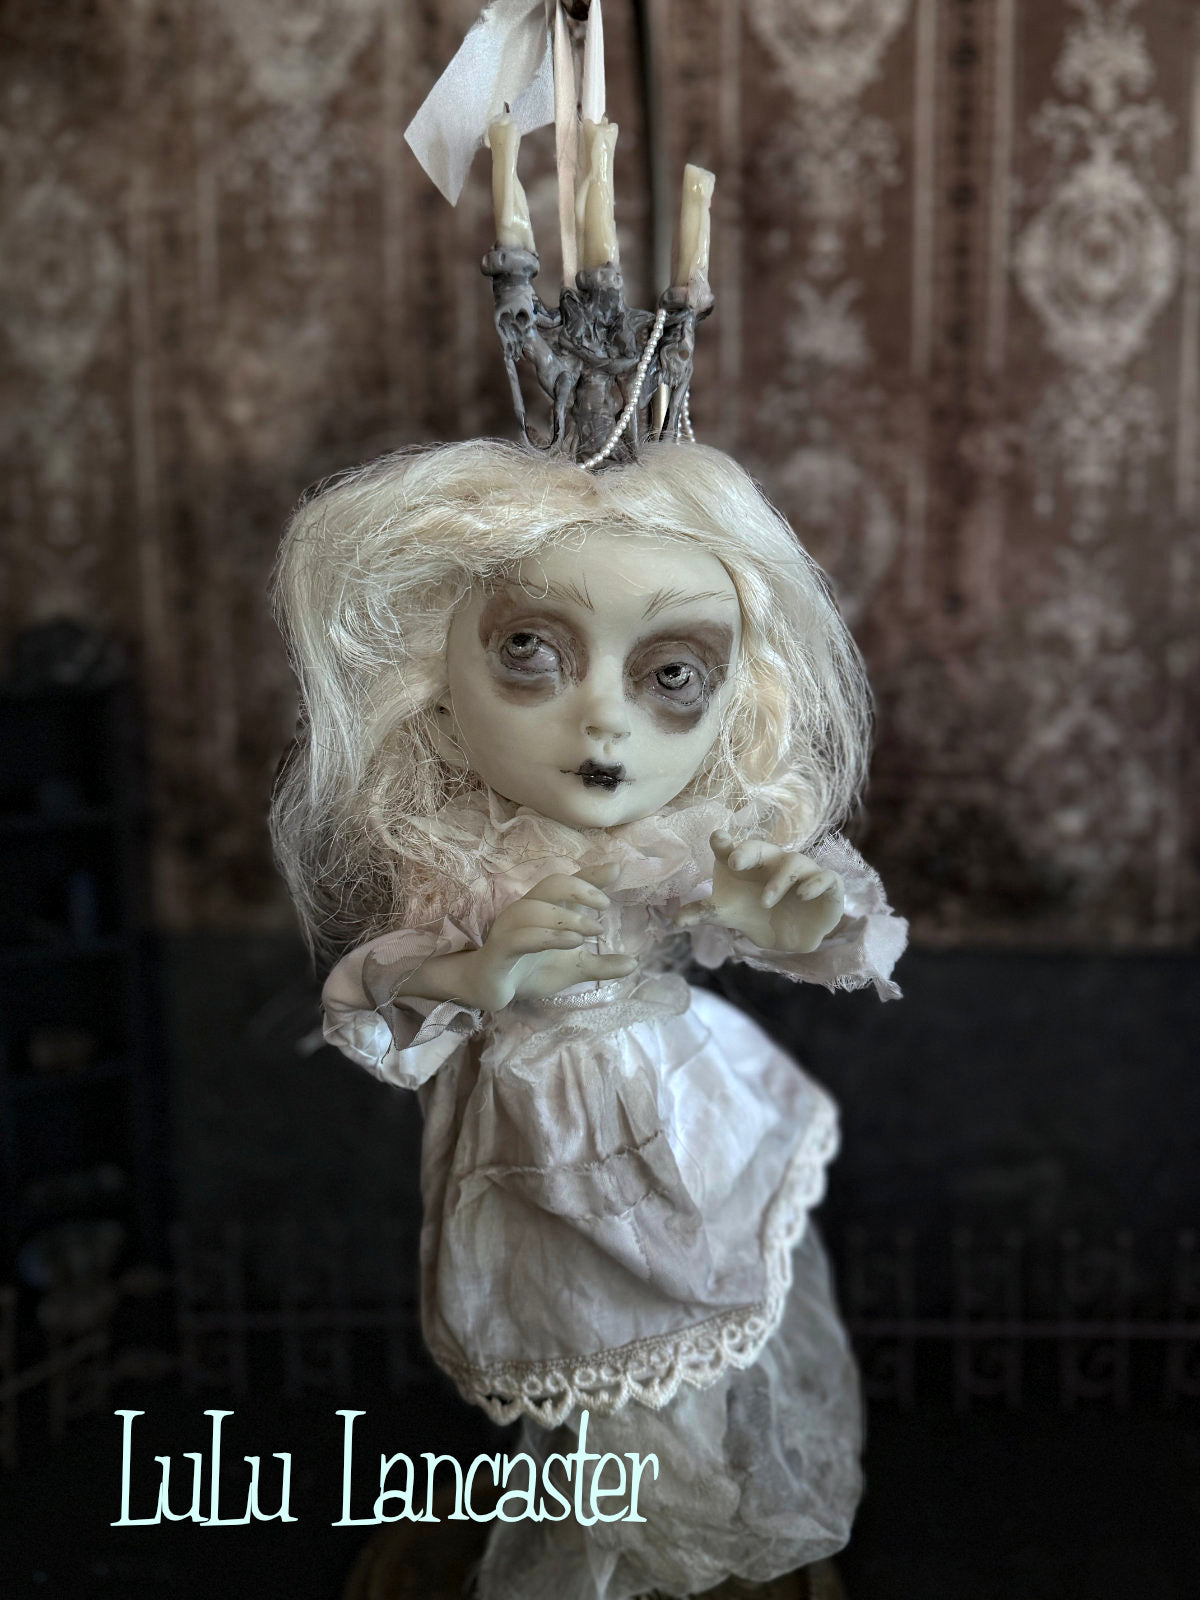 Isabella glow in the dark hanging ghost Original LuLu Lancaster Art Doll